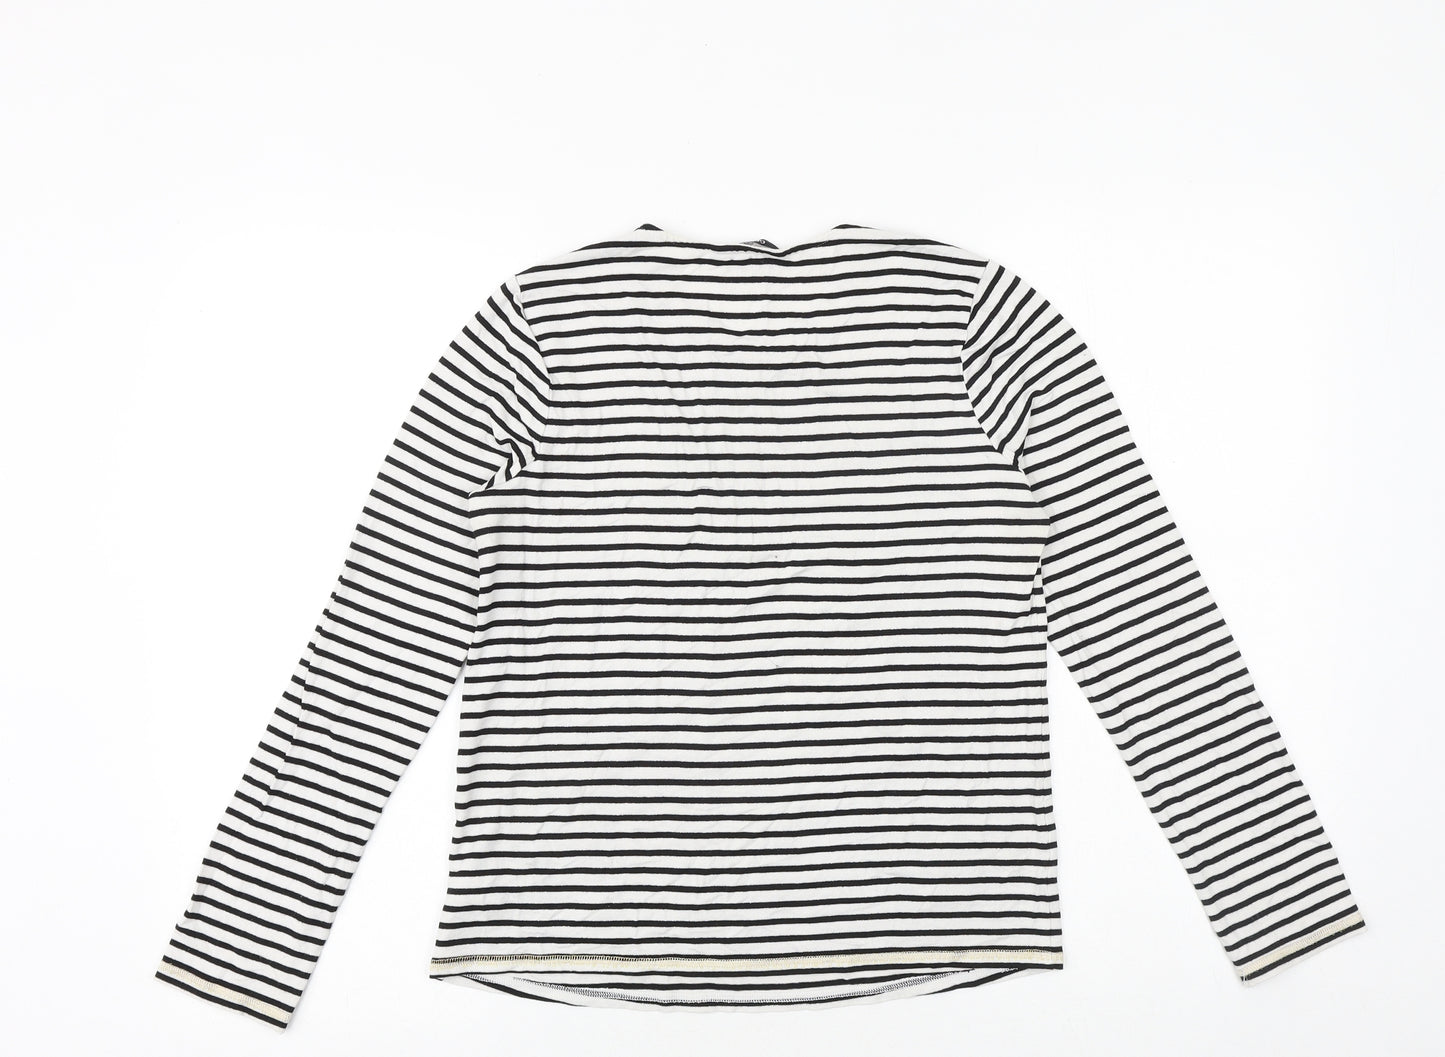 George Girls Black Striped Viscose Basic T-Shirt Size 13-14 Years Round Neck Pullover - Flower